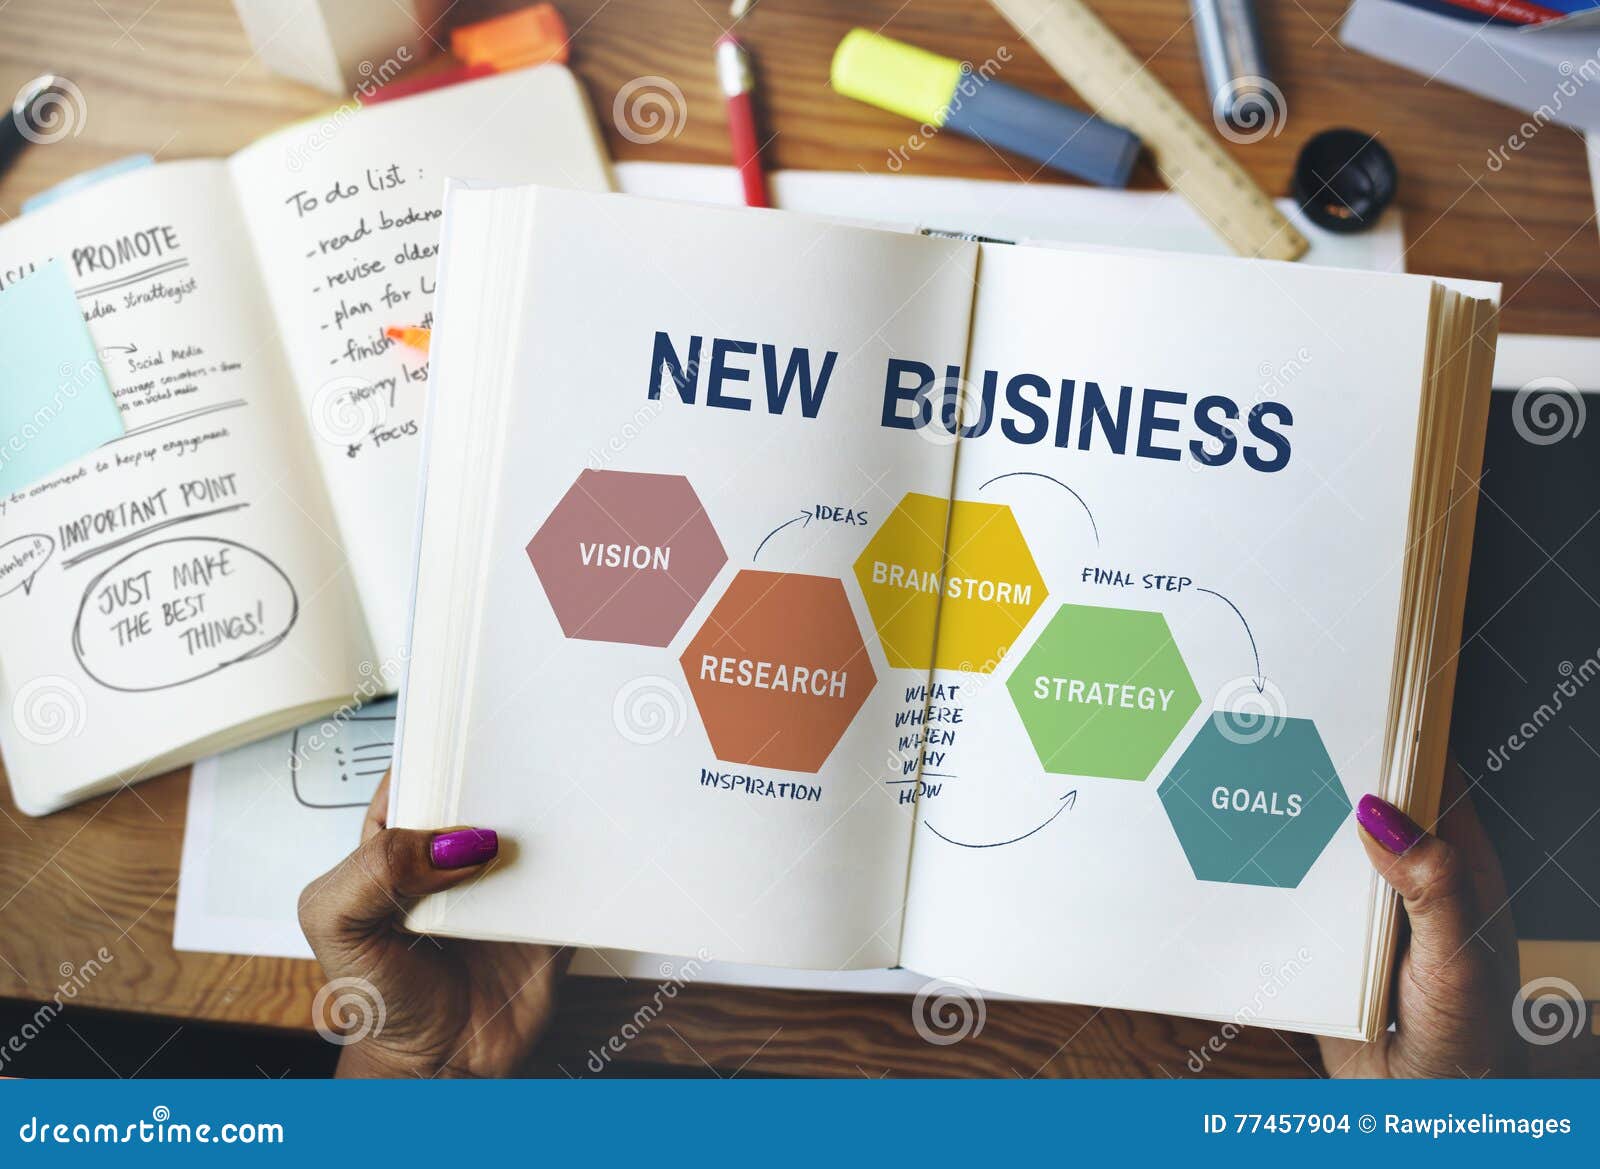 new business vision objective entrepreneur concept